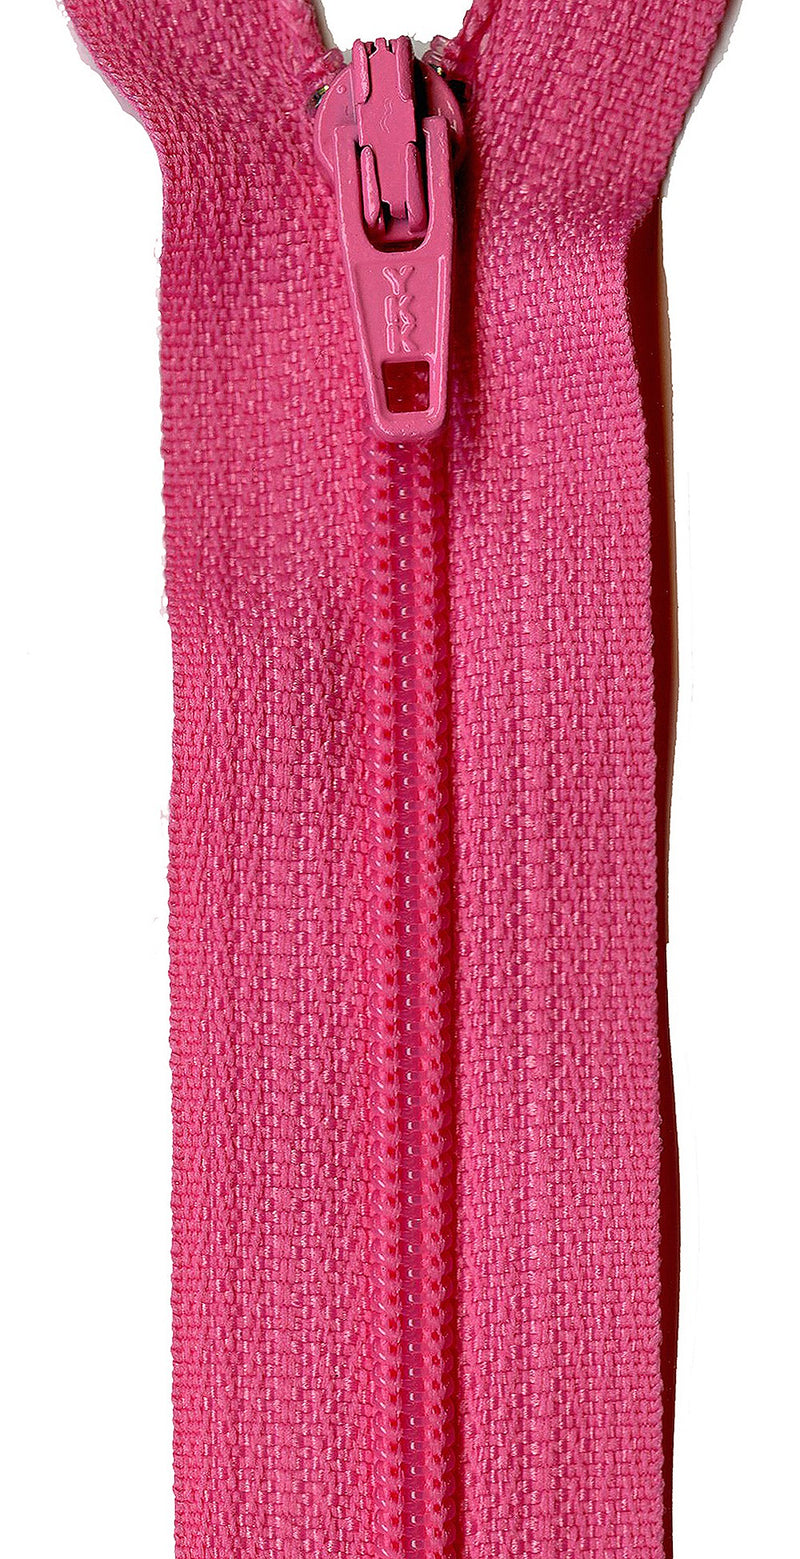 Zipper - Rosy Cheeks 14 in